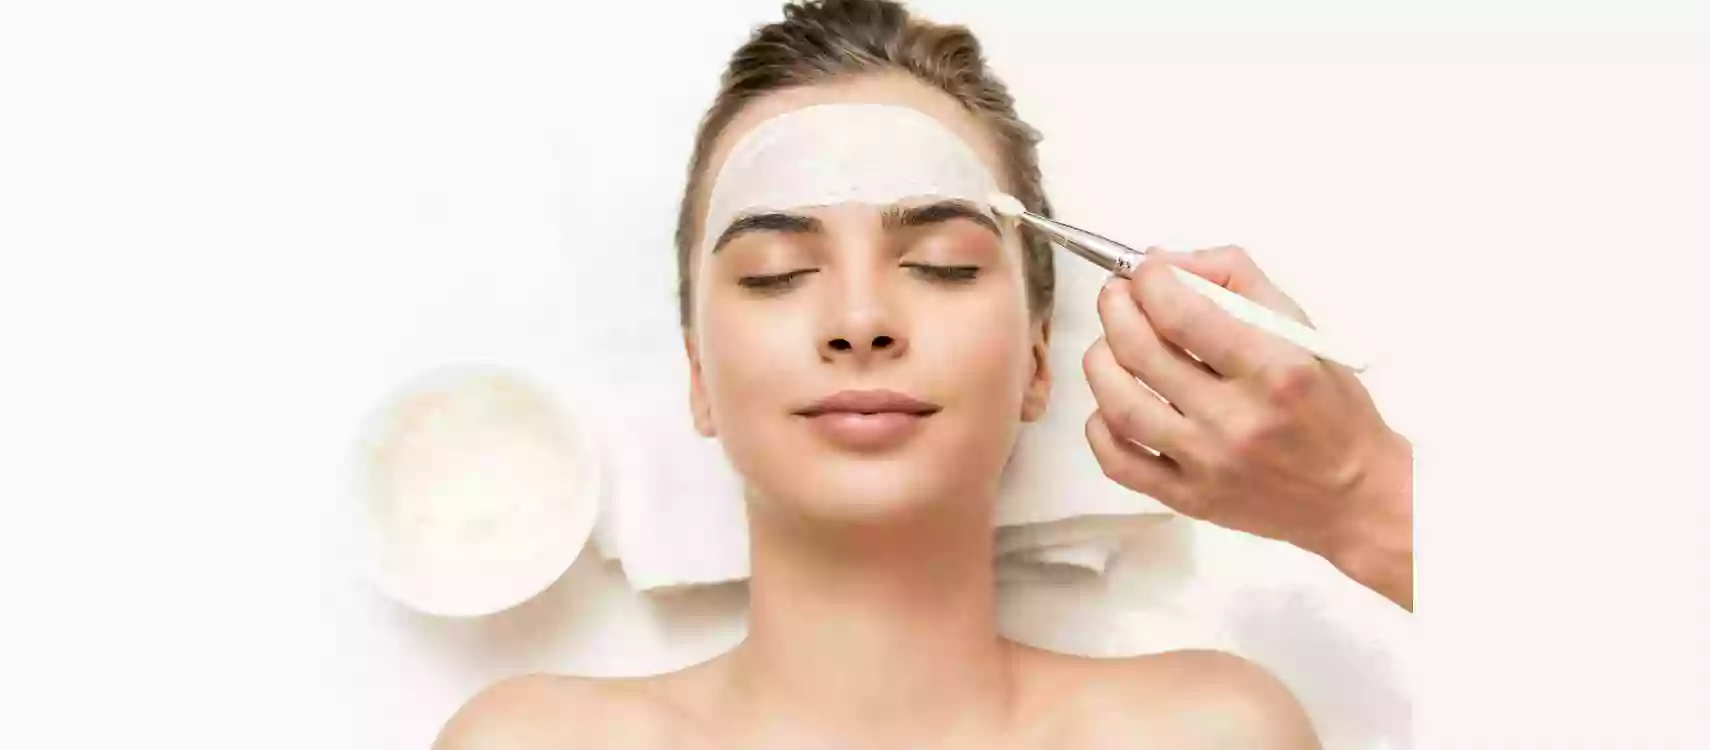 Beauty Frizz - Facials / Anti-aging treatments / HydraFacials